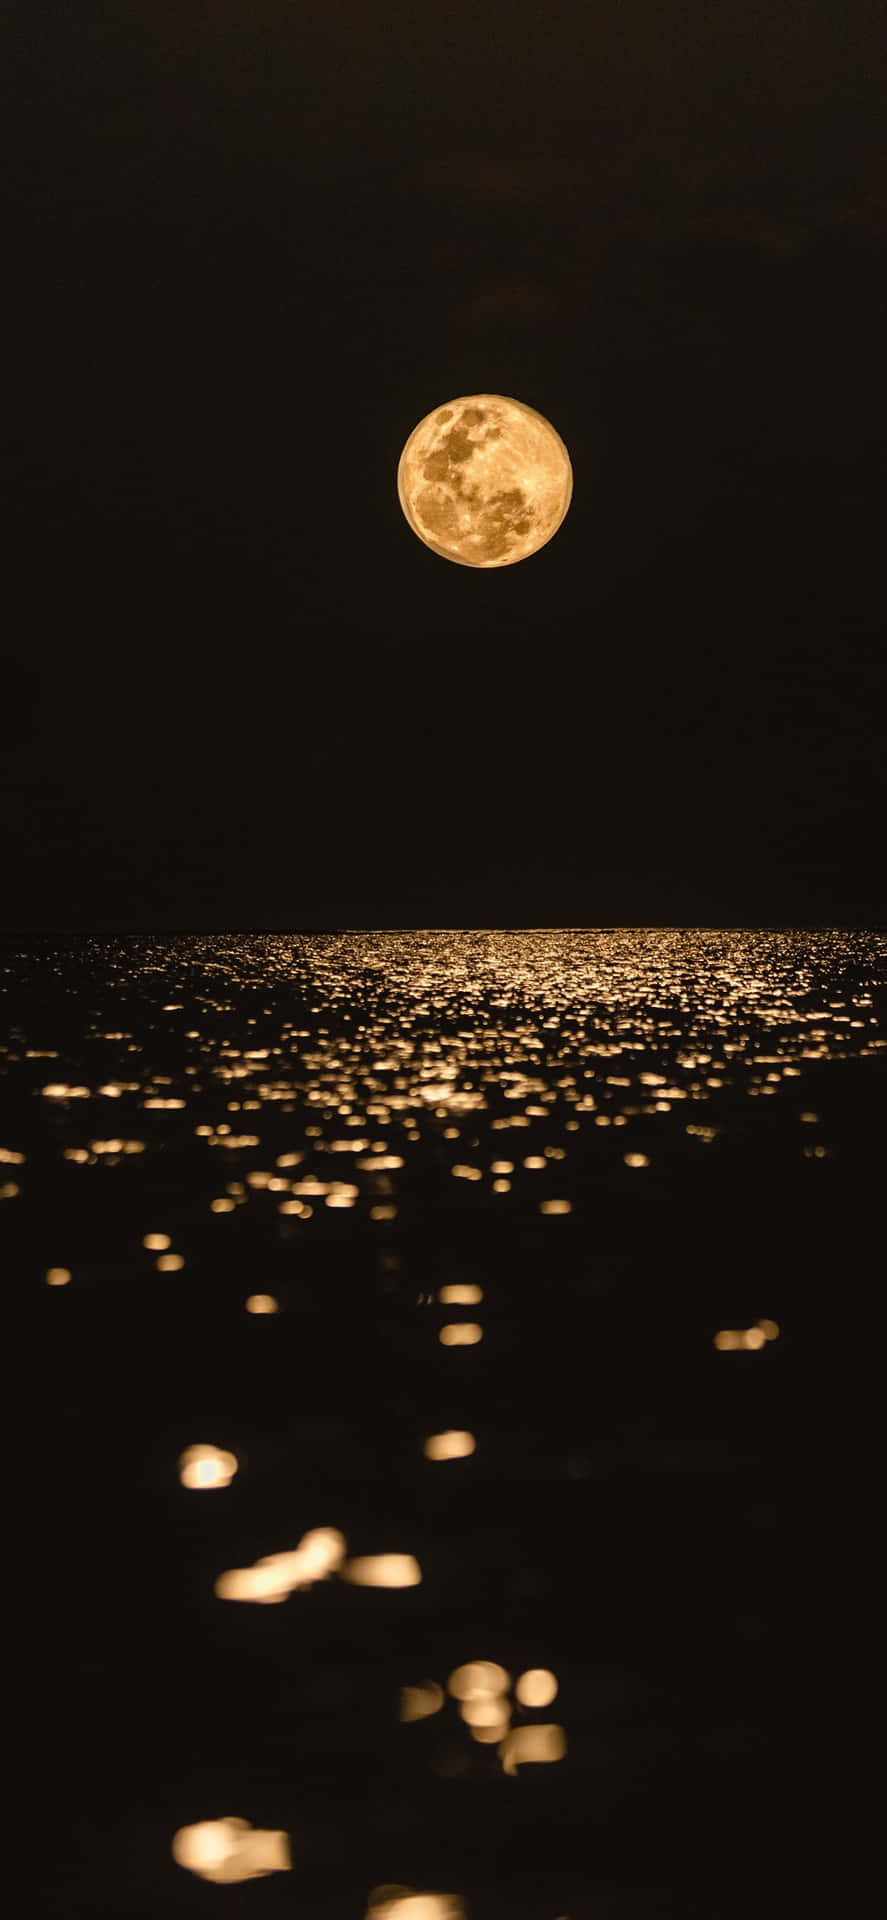 Majestic Full Moon Against Night Sky